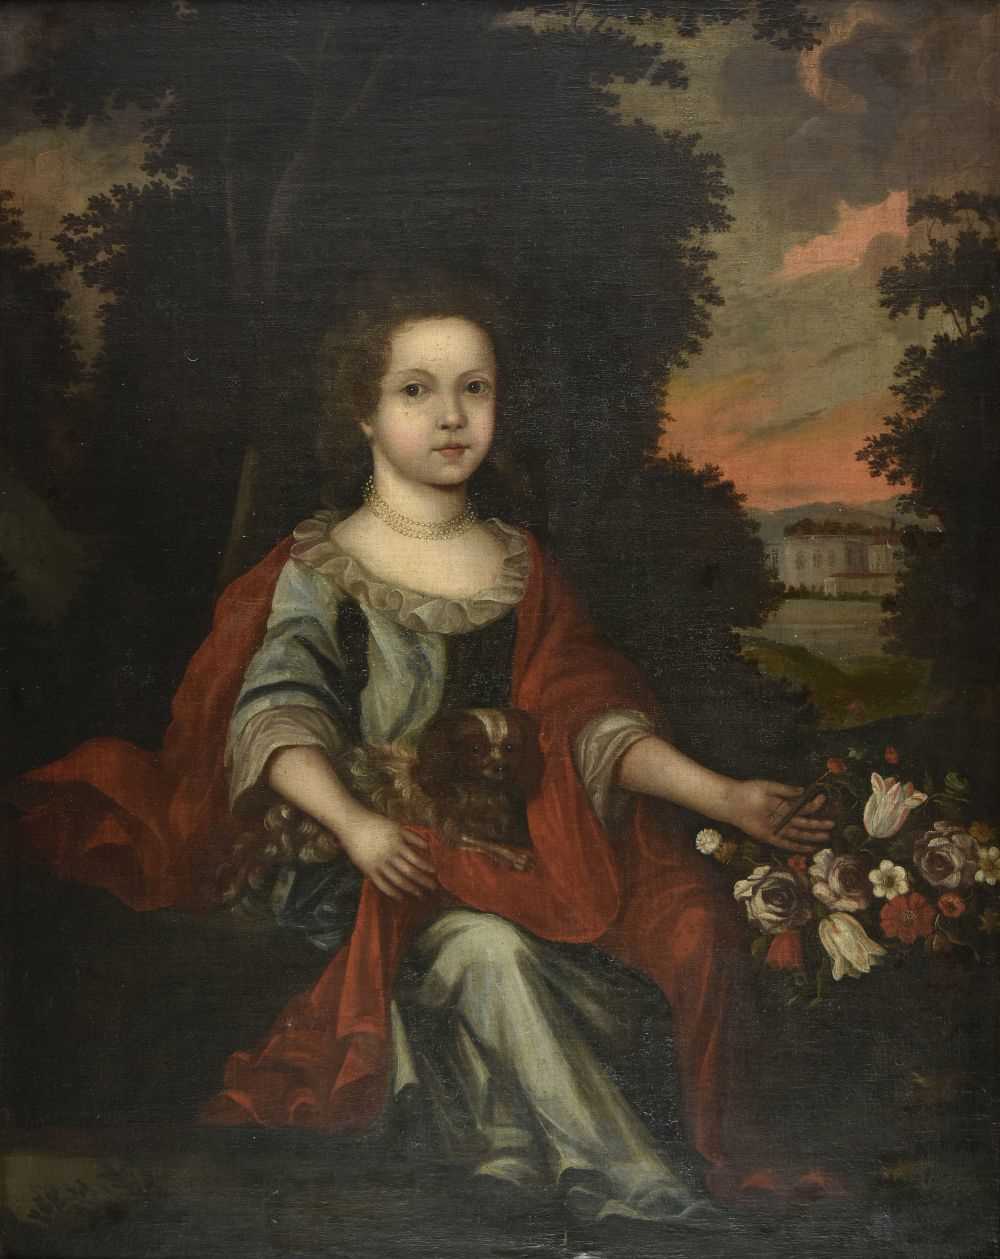 Lot 203 - English School. Girl with Dog, circa 1660-1700